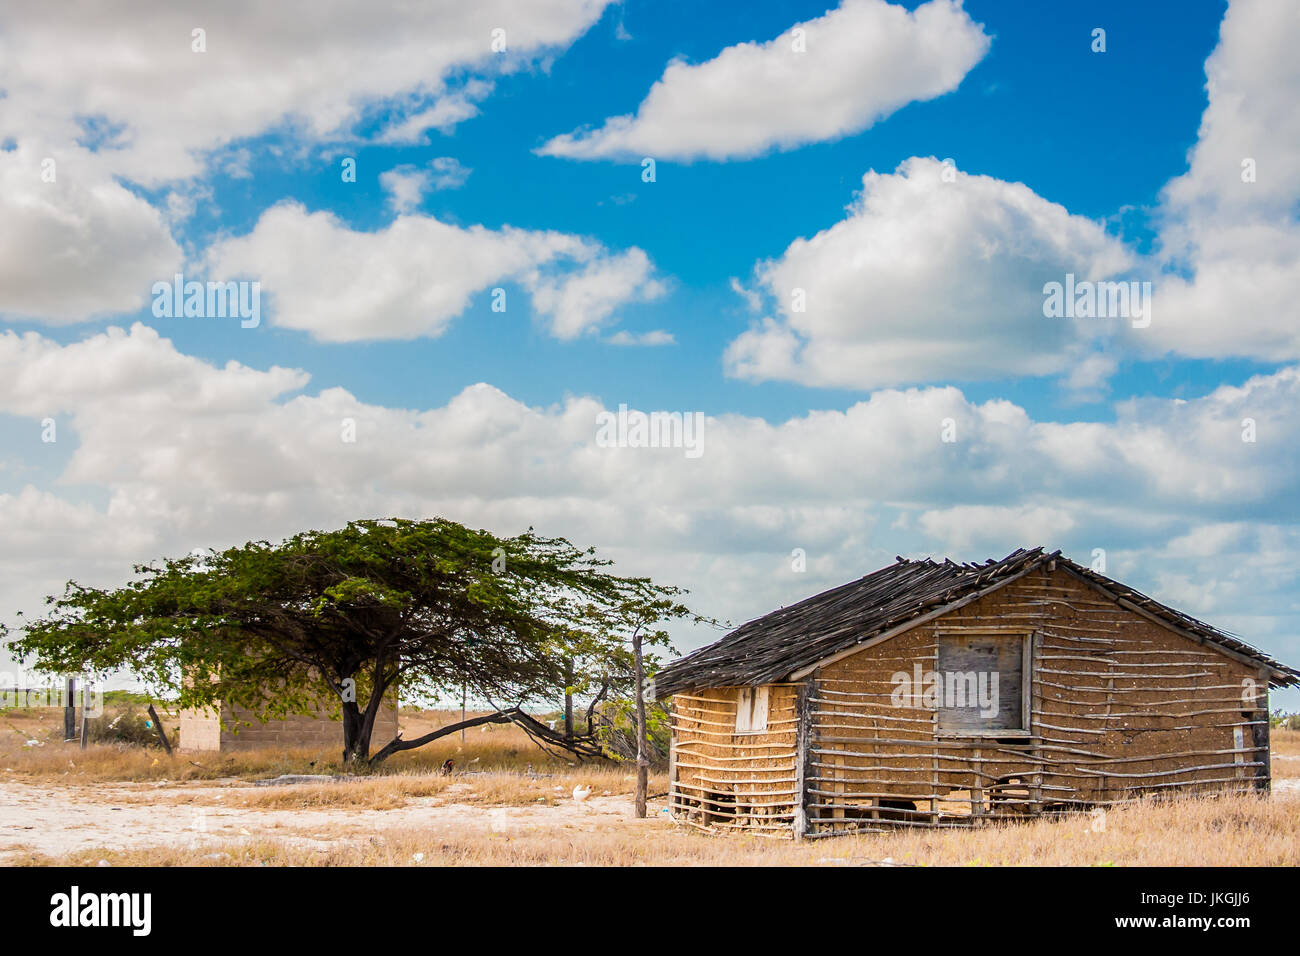 Traditional adobe house on the desert under blue sky Stock Photo